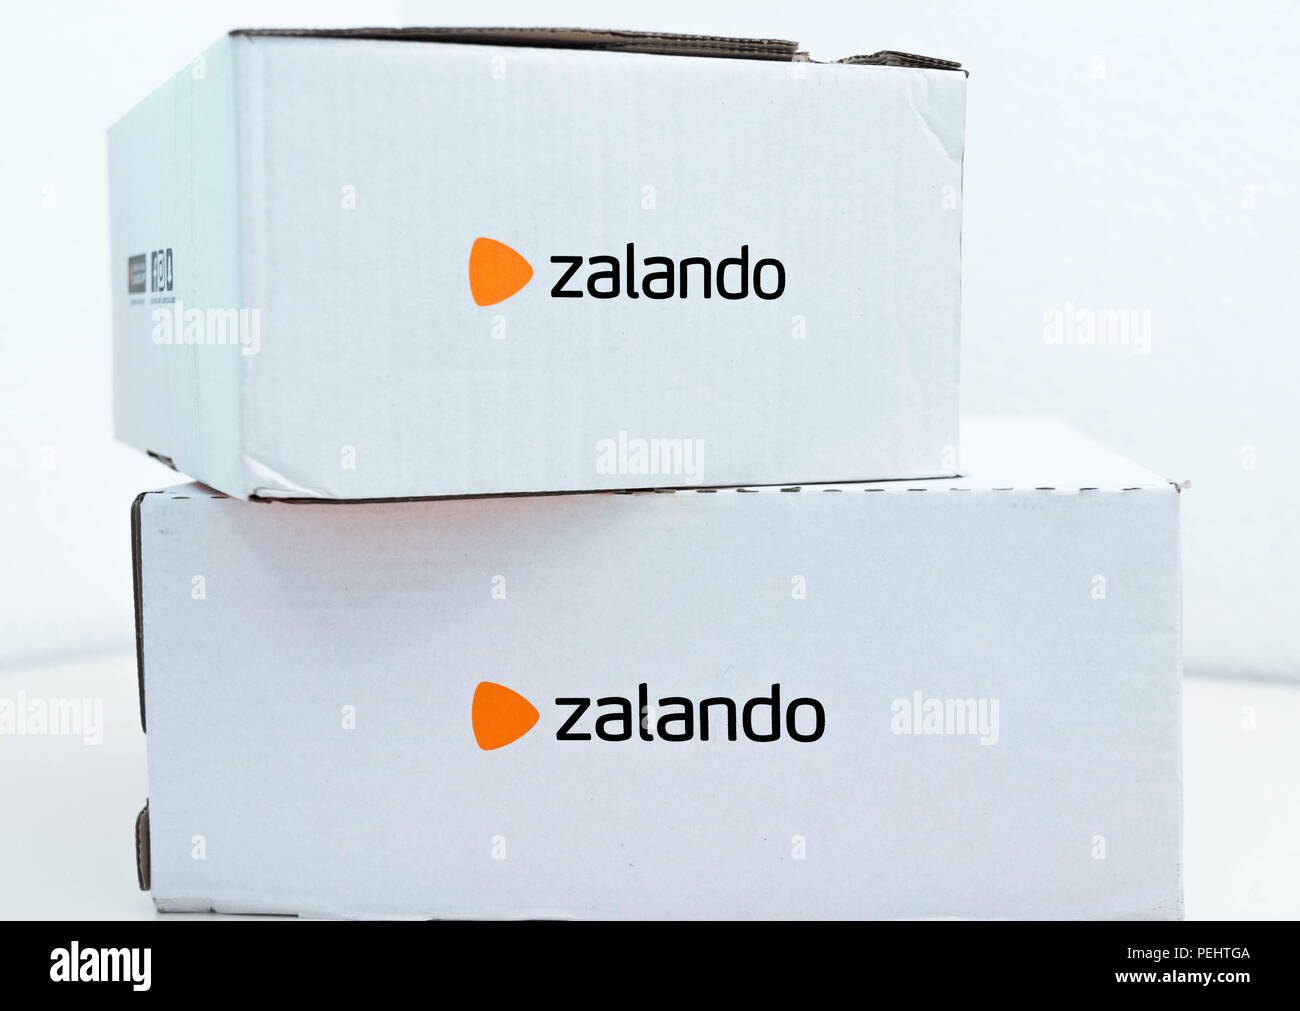 Paket zalando -Fotos und -Bildmaterial in hoher Auflösung – Alamy